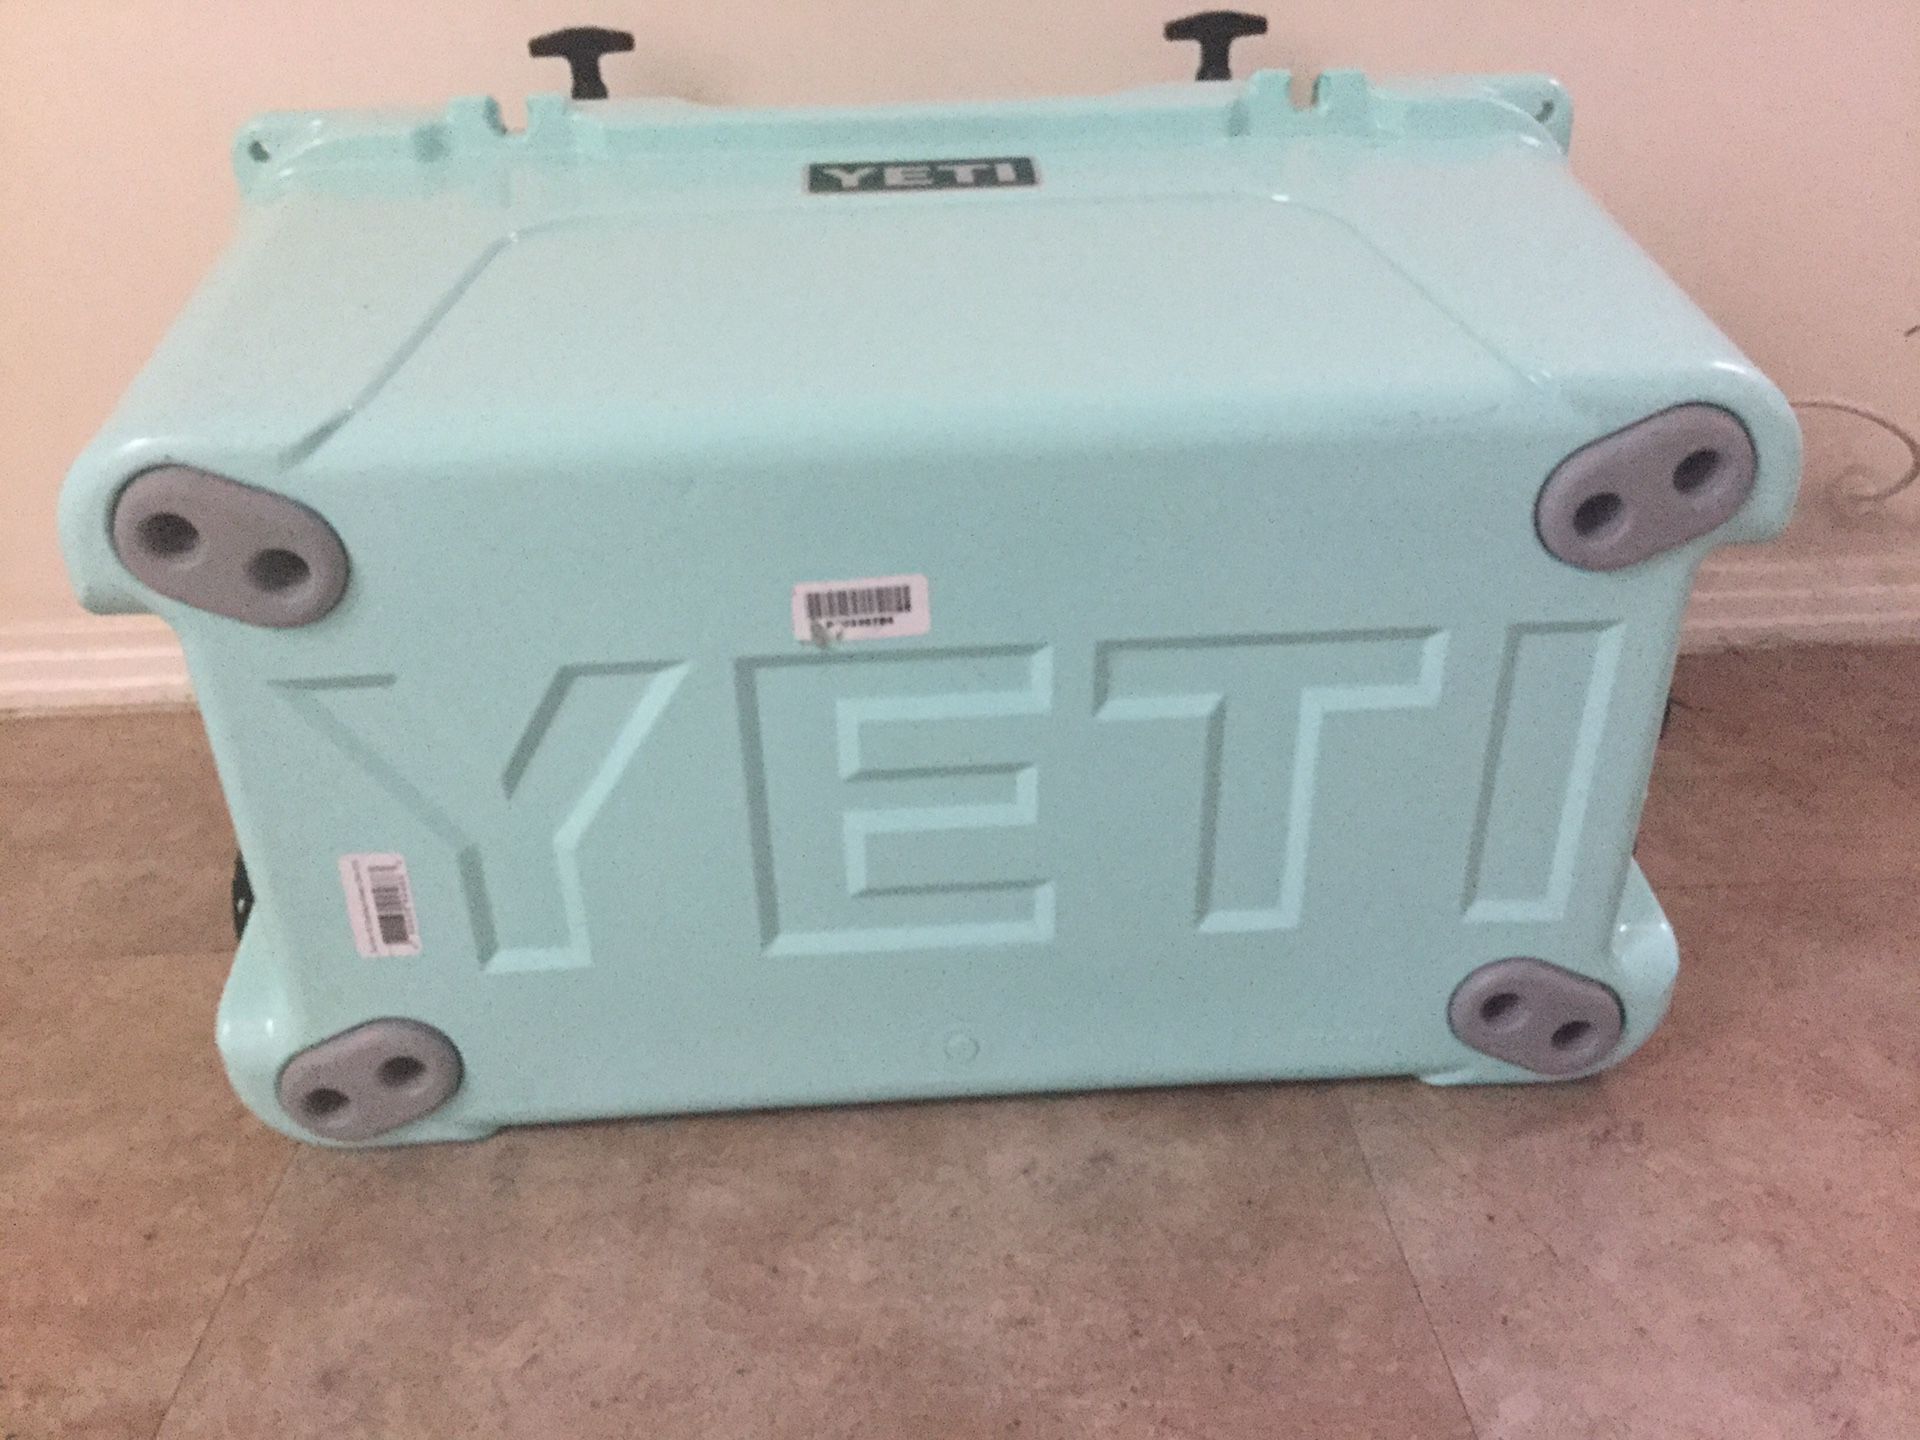 Yeti Tundra 45, 28-Can Cooler, Seafoam - Bliffert Lumber and Hardware